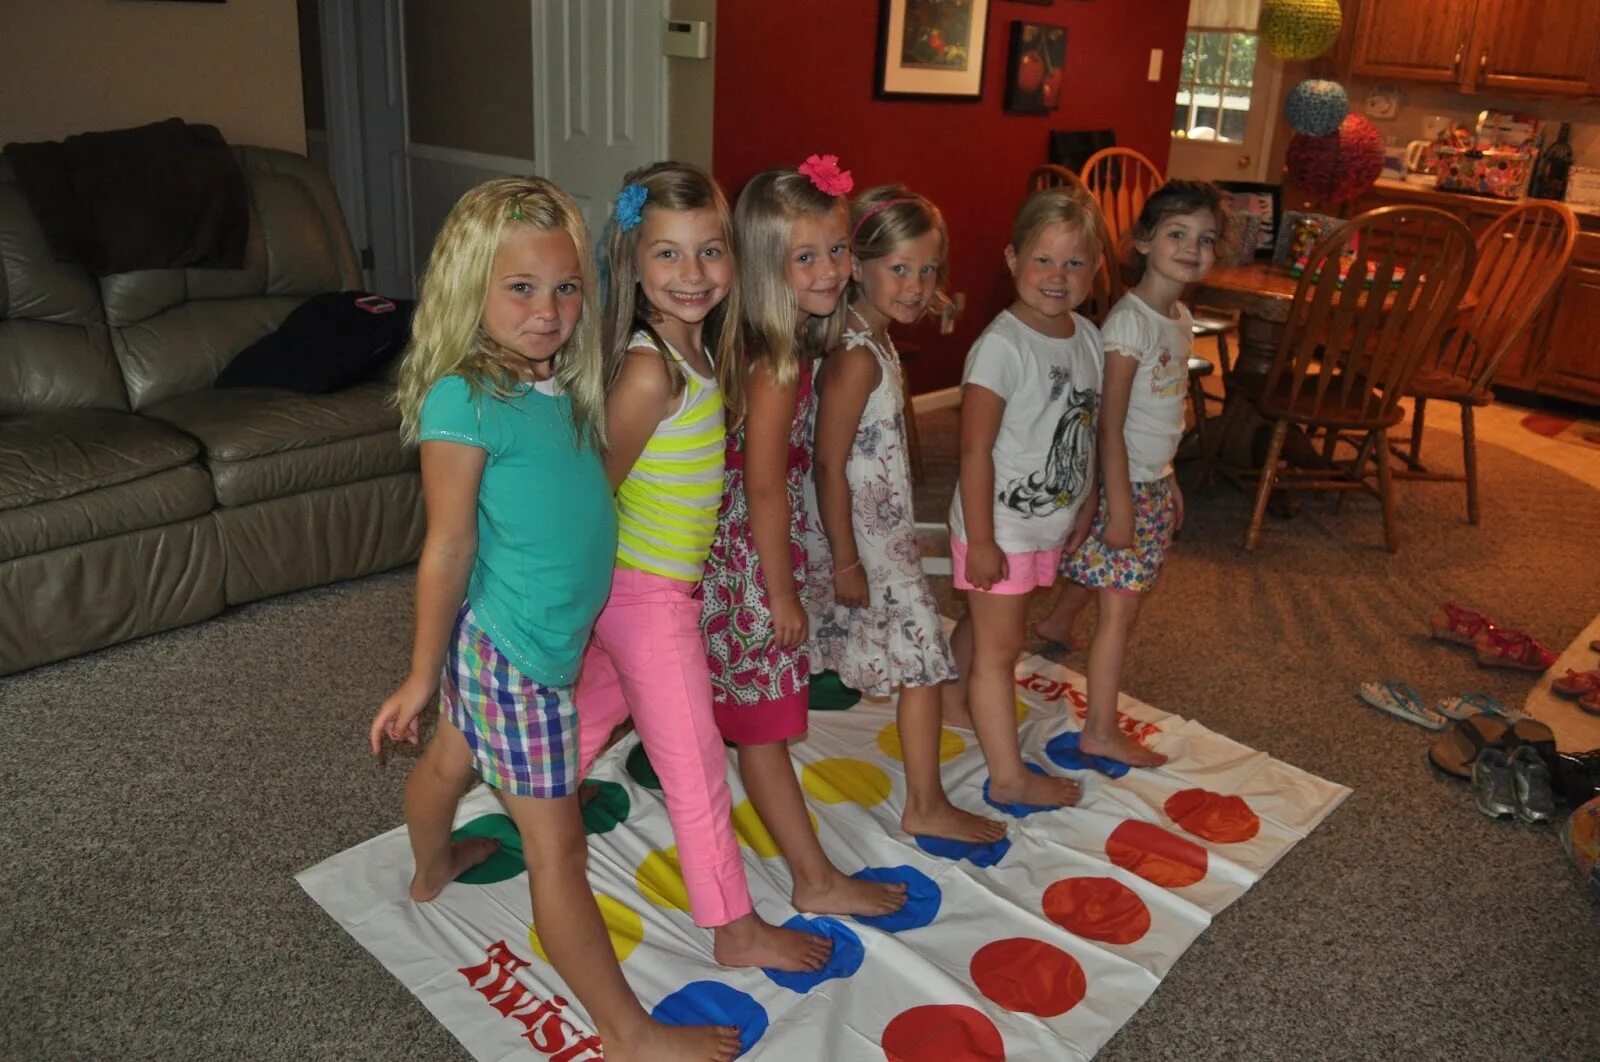 Little твистер. Twister Kids. Kids playing Twister. Девочки играют в твистер. Little player